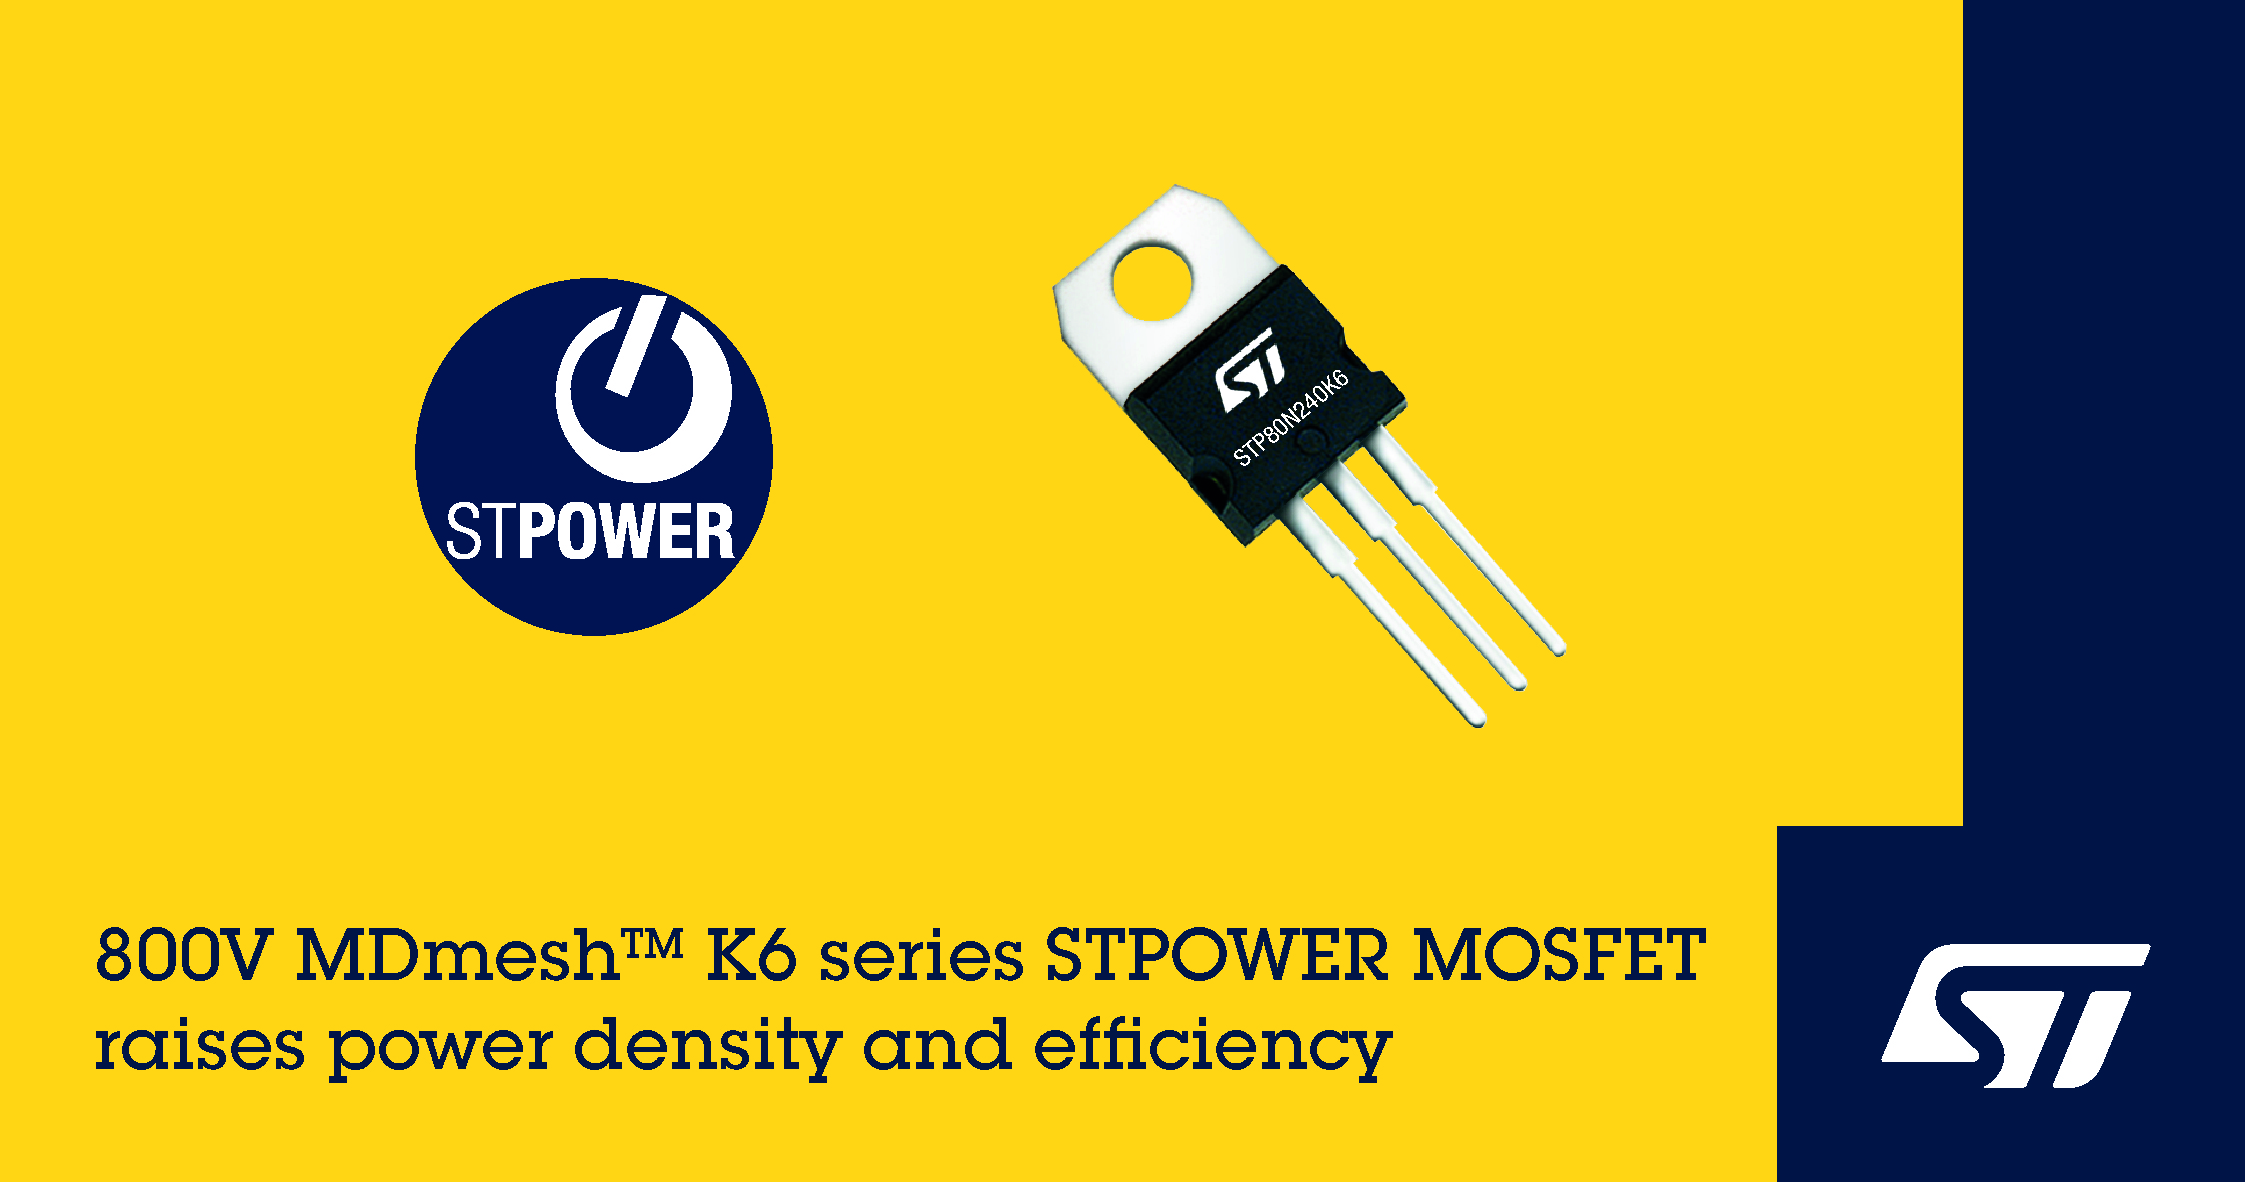 意法半導體新MDmesh? K6 800V STPOWER MOSFET提高能效，最大限度降低開關功率損耗